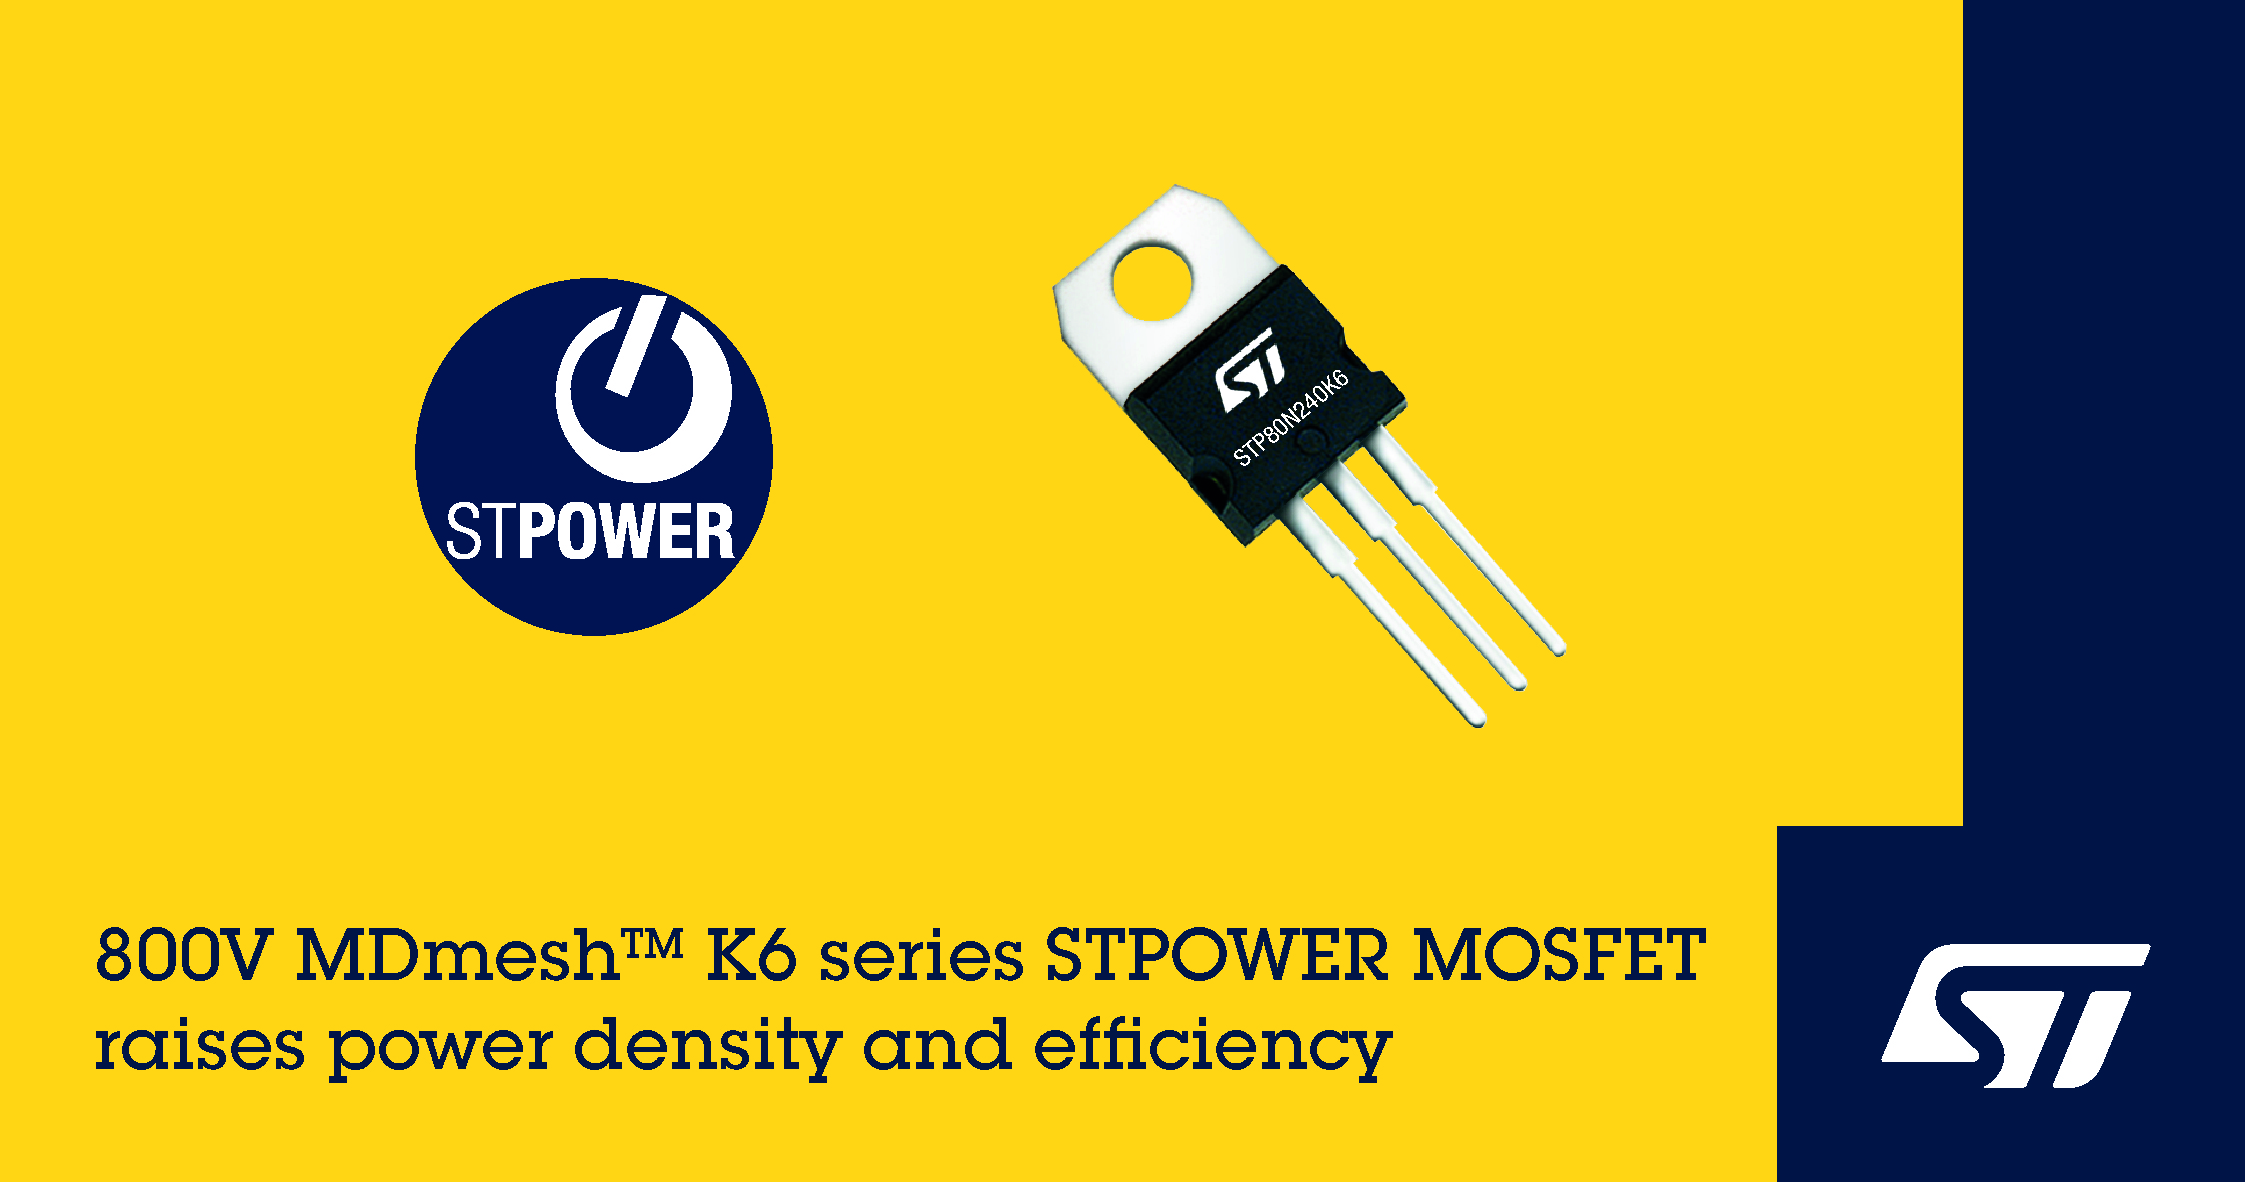 意法半導體新MDmesh? K6 800V STPOWER MOSFET提高能效，最大限度降低開關功率損耗